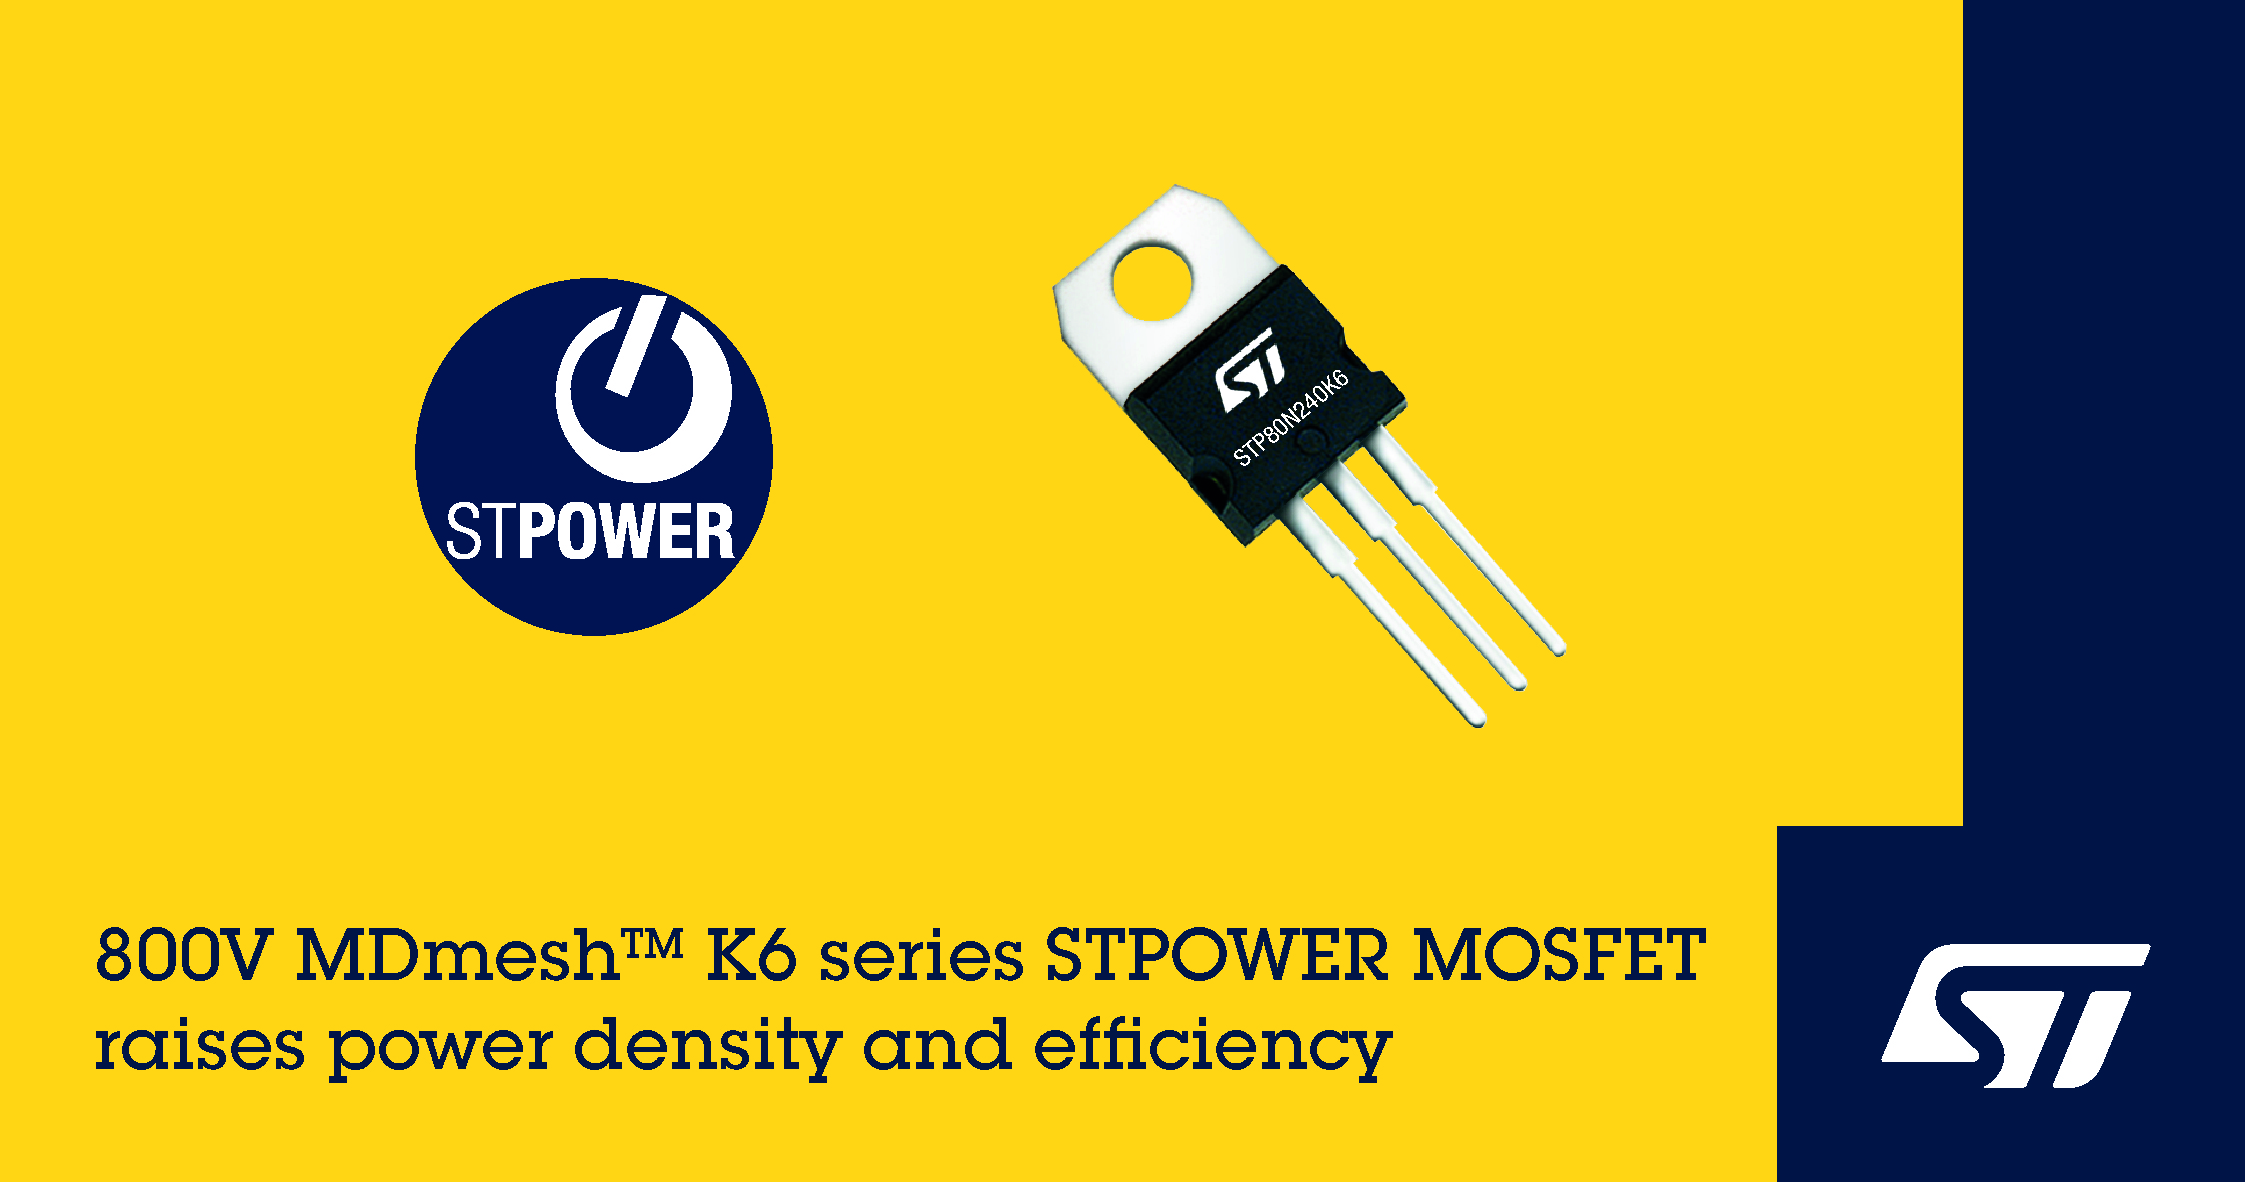 意法半導體新MDmesh? K6 800V STPOWER MOSFET提高能效，最大限度降低開關功率損耗